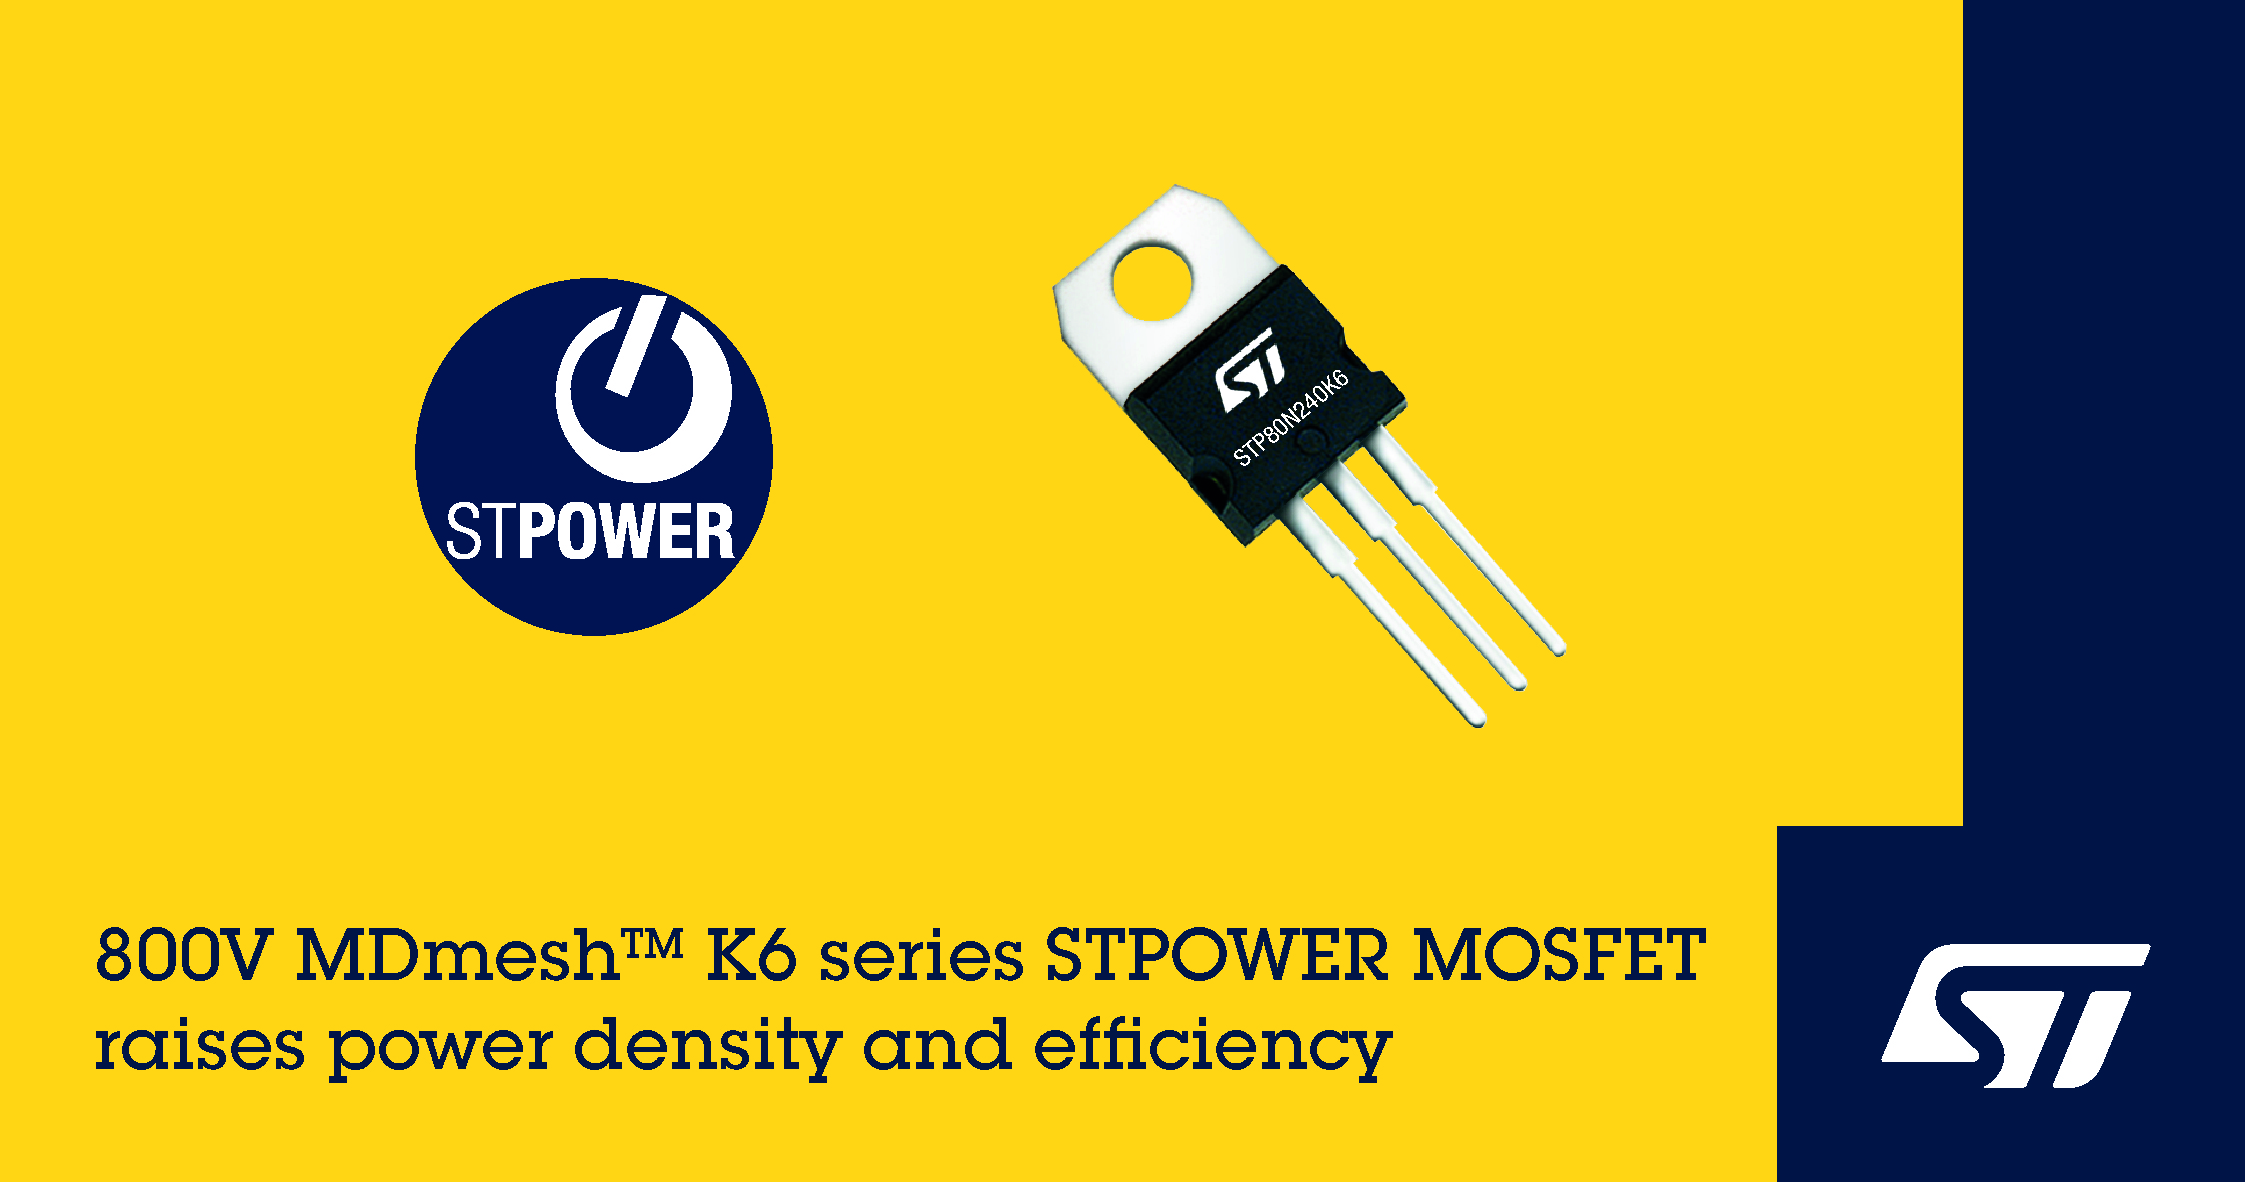 意法半導體新MDmesh? K6 800V STPOWER MOSFET提高能效，最大限度降低開關功率損耗